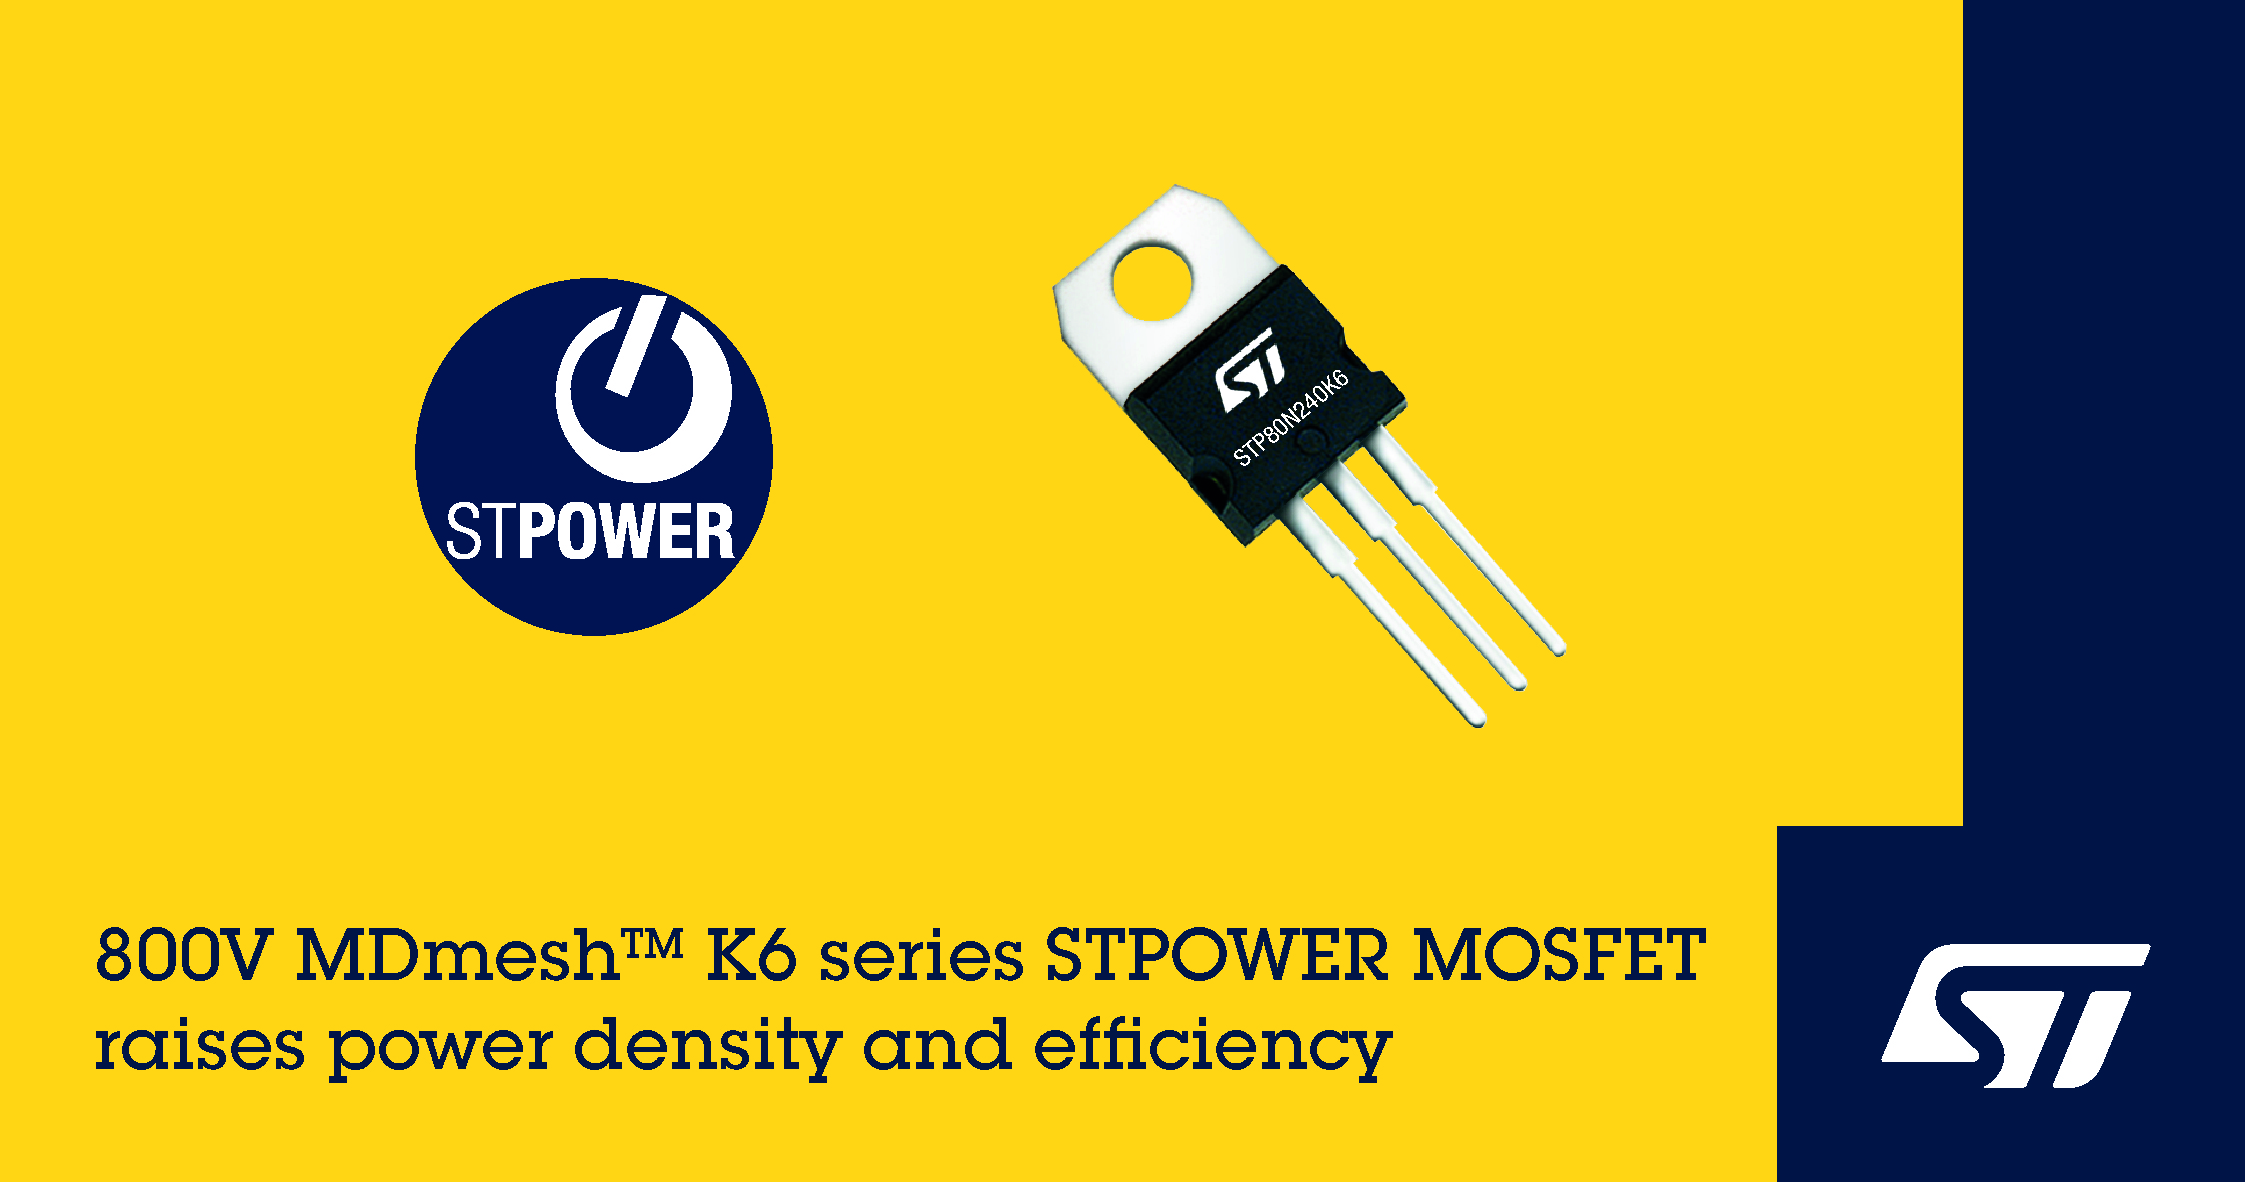 意法半導體新MDmesh? K6 800V STPOWER MOSFET提高能效，最大限度降低開關功率損耗